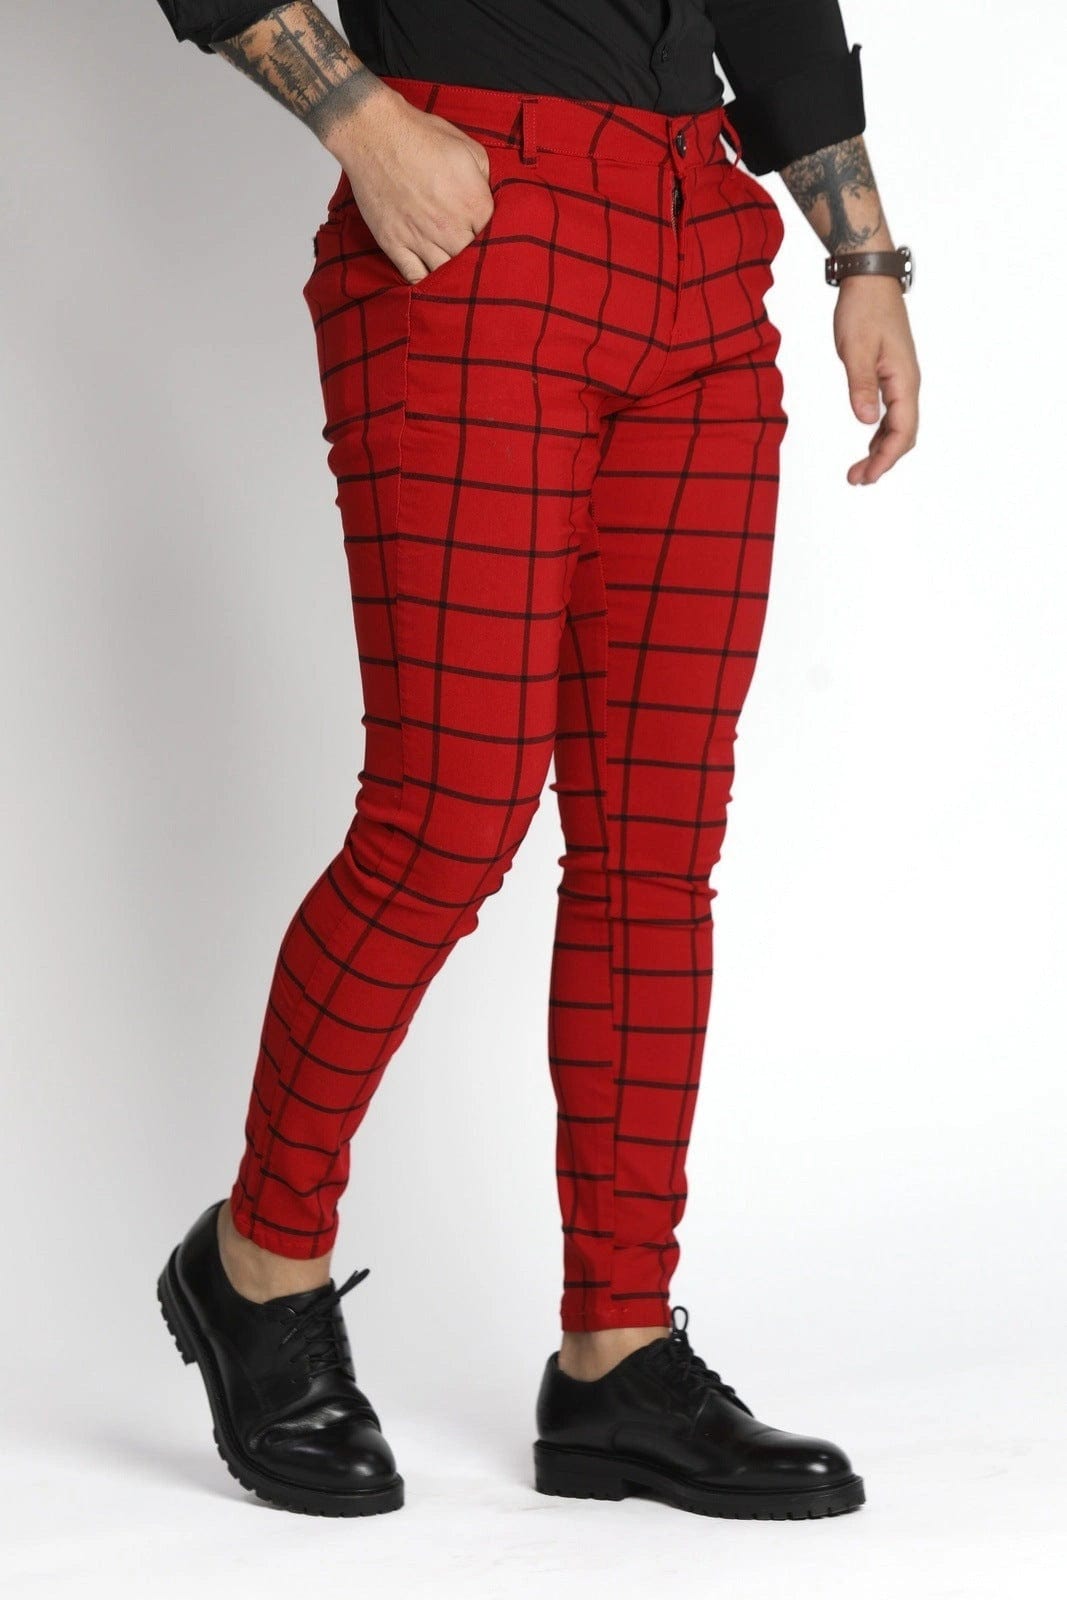 Plaid Tartan Red Pants Juniors size Small European brand | eBay